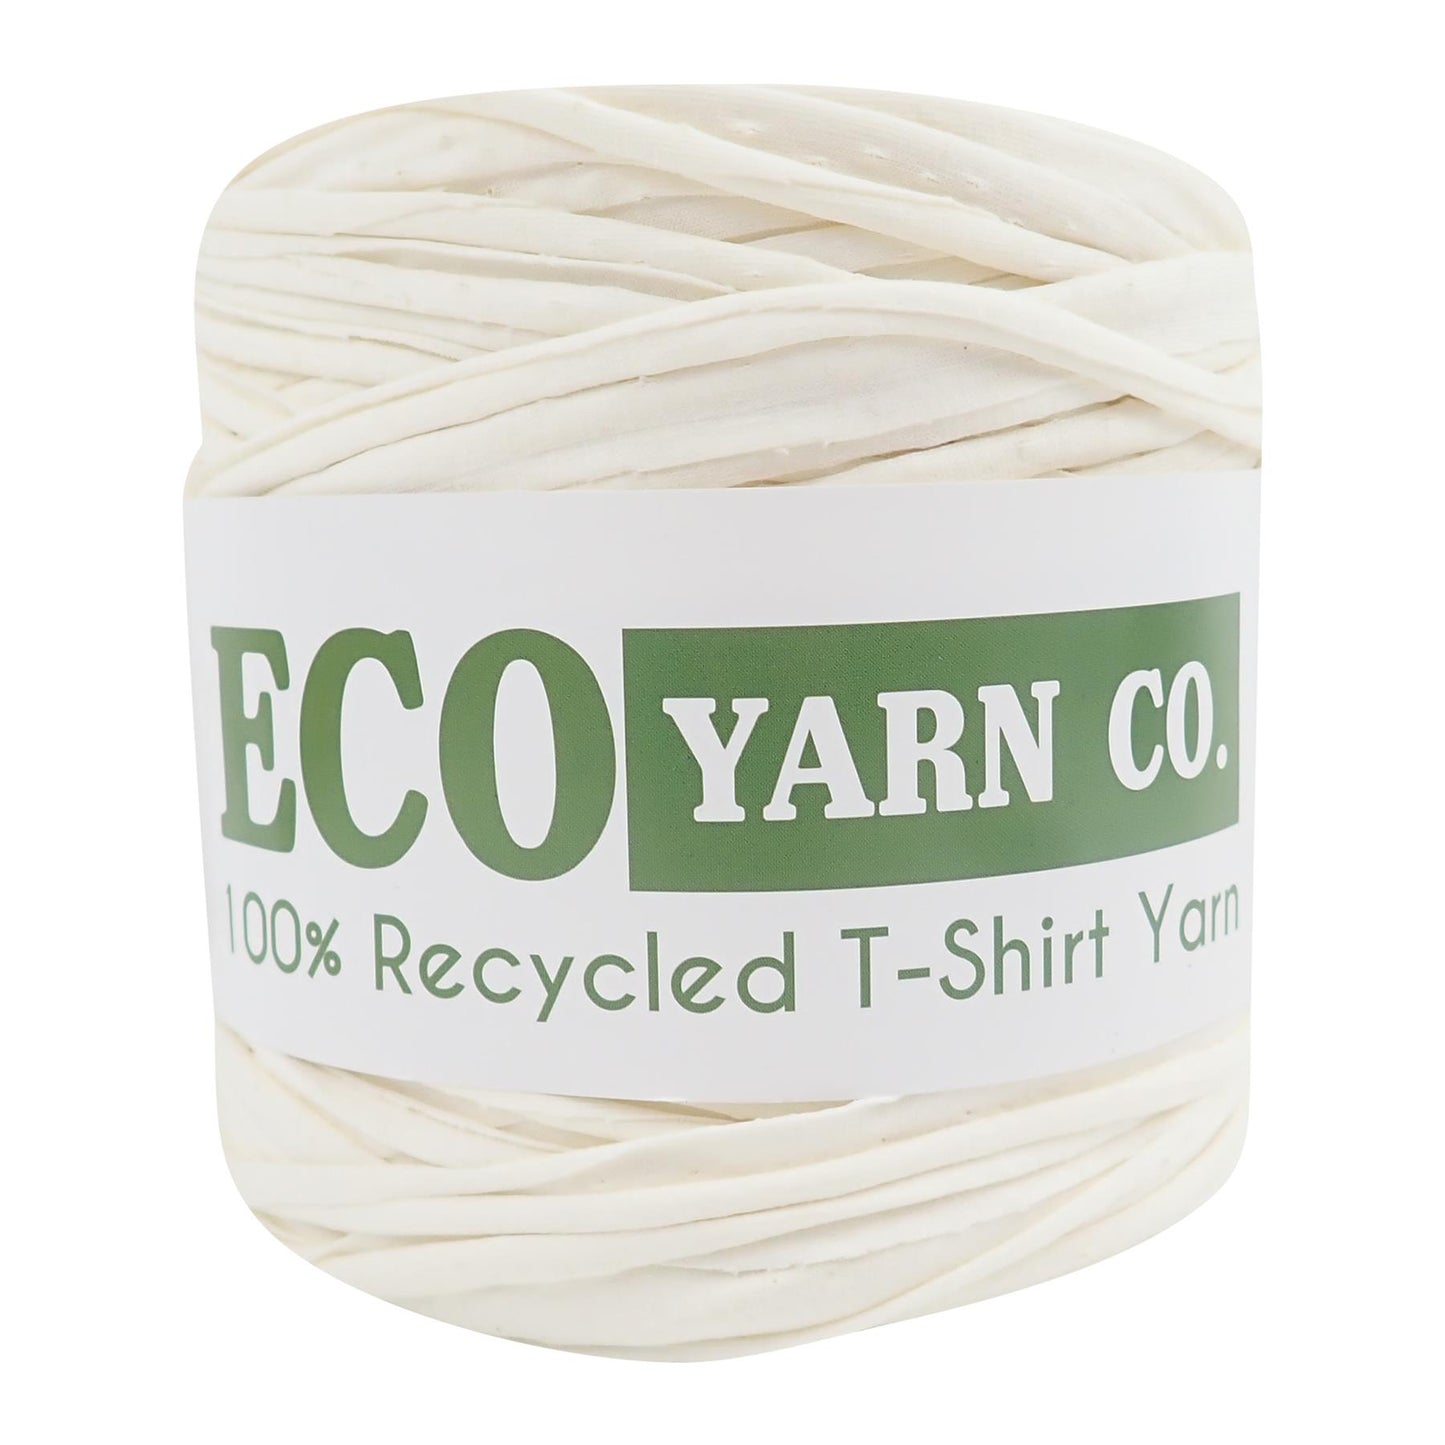 Eco Yarn Co off-White Cotton T-Shirt Yarn - 120M 700g